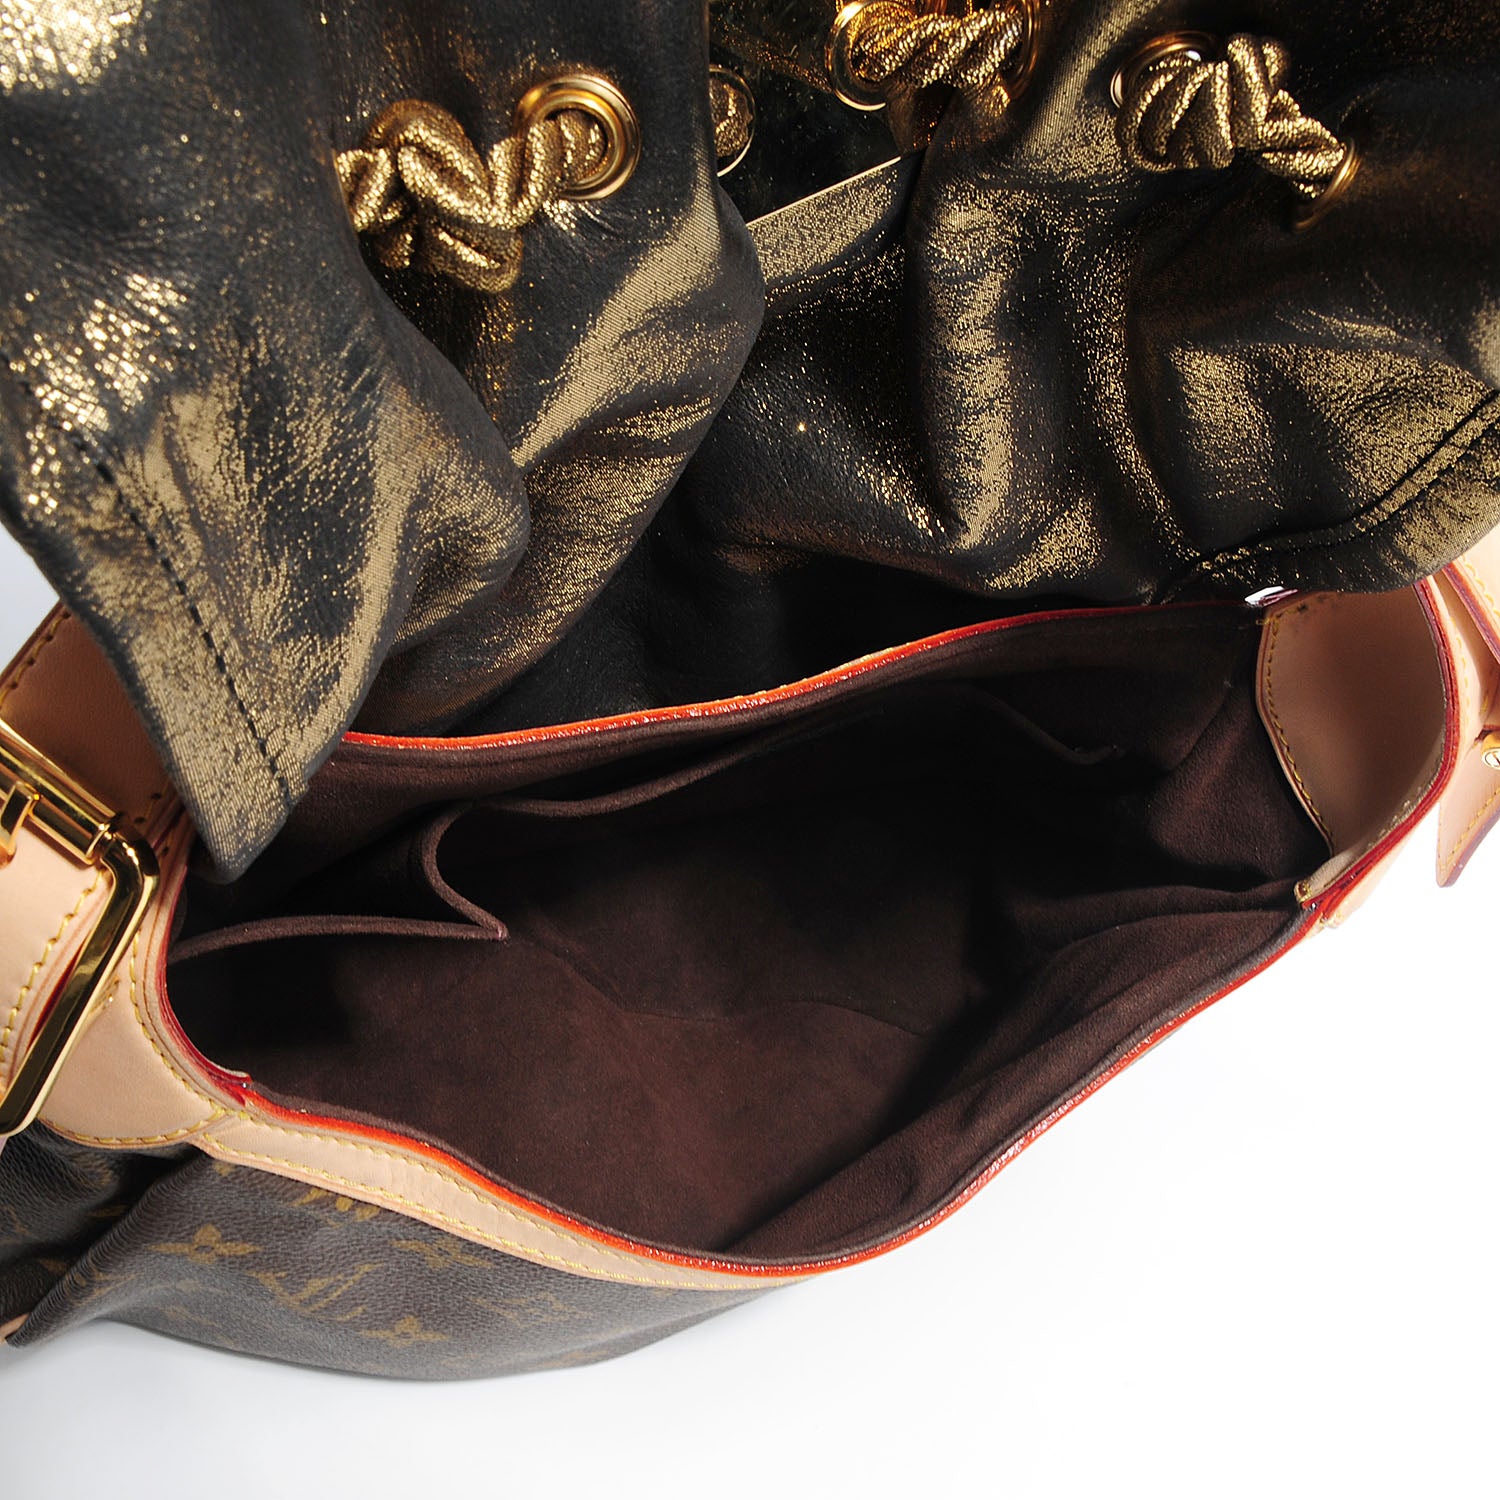 LOUIS VUITTON Kalahari Pm Bag BRAND NEW! Limited Edition Gorgeous